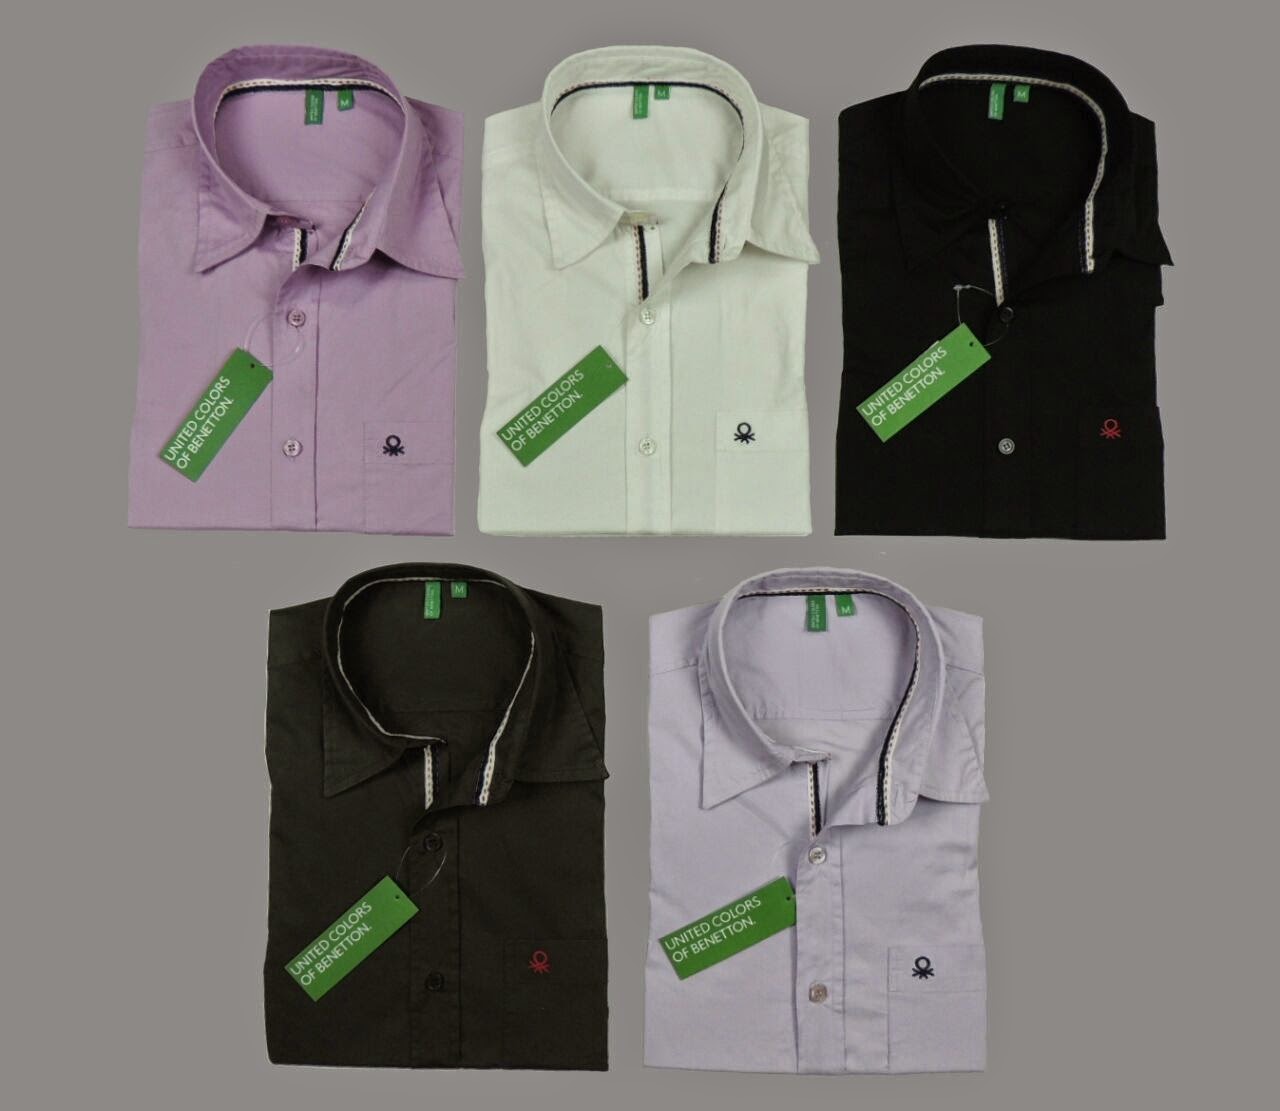 wholesale shirts in chennai